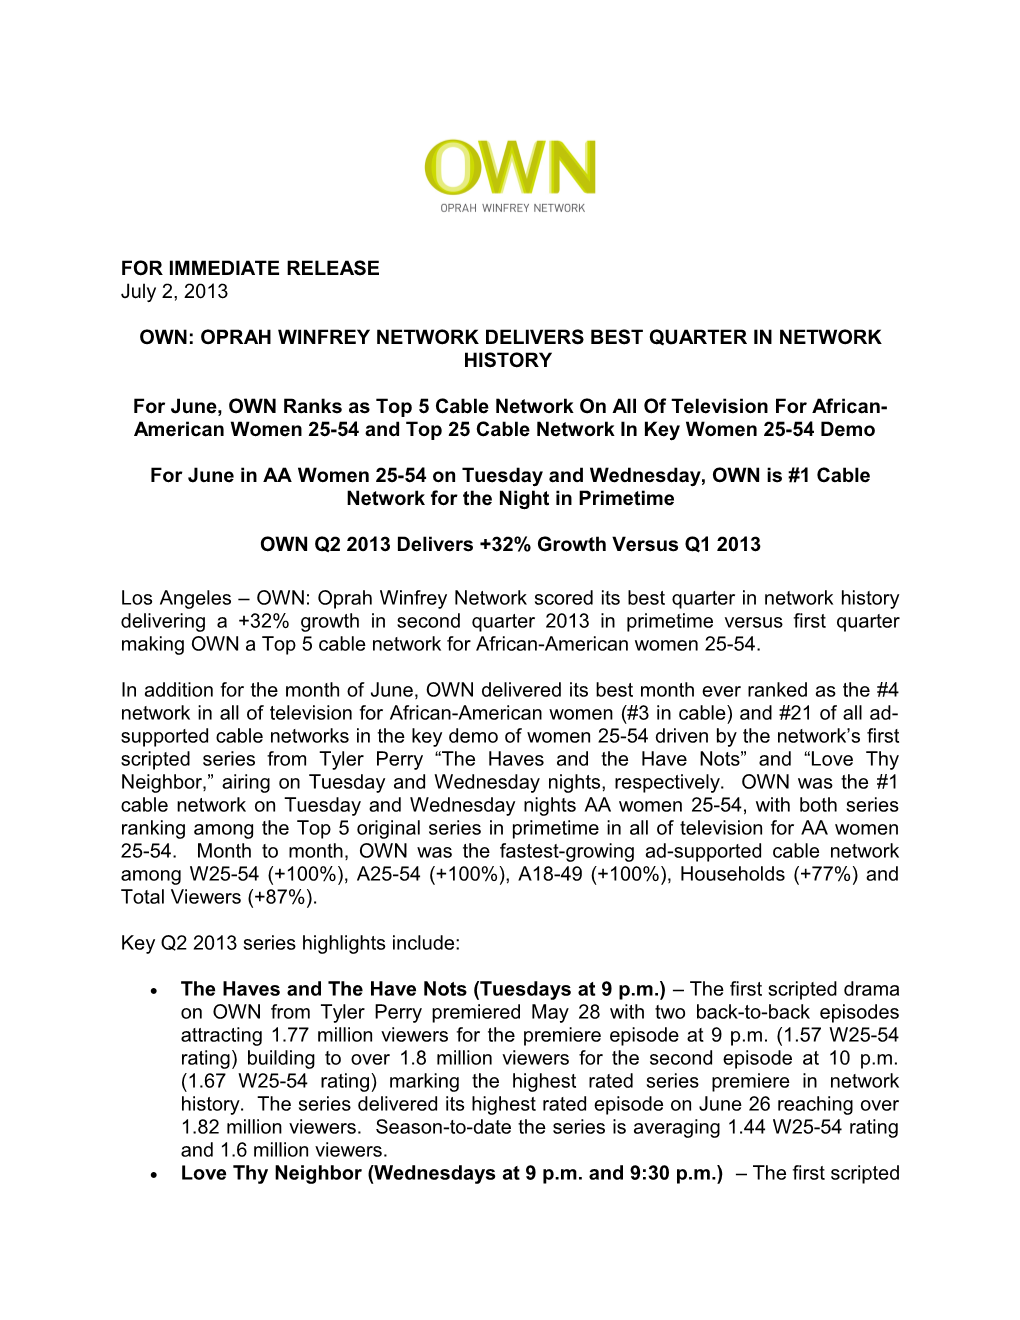 Own: Oprah Winfrey Network Delivers Best Quarter in Network History